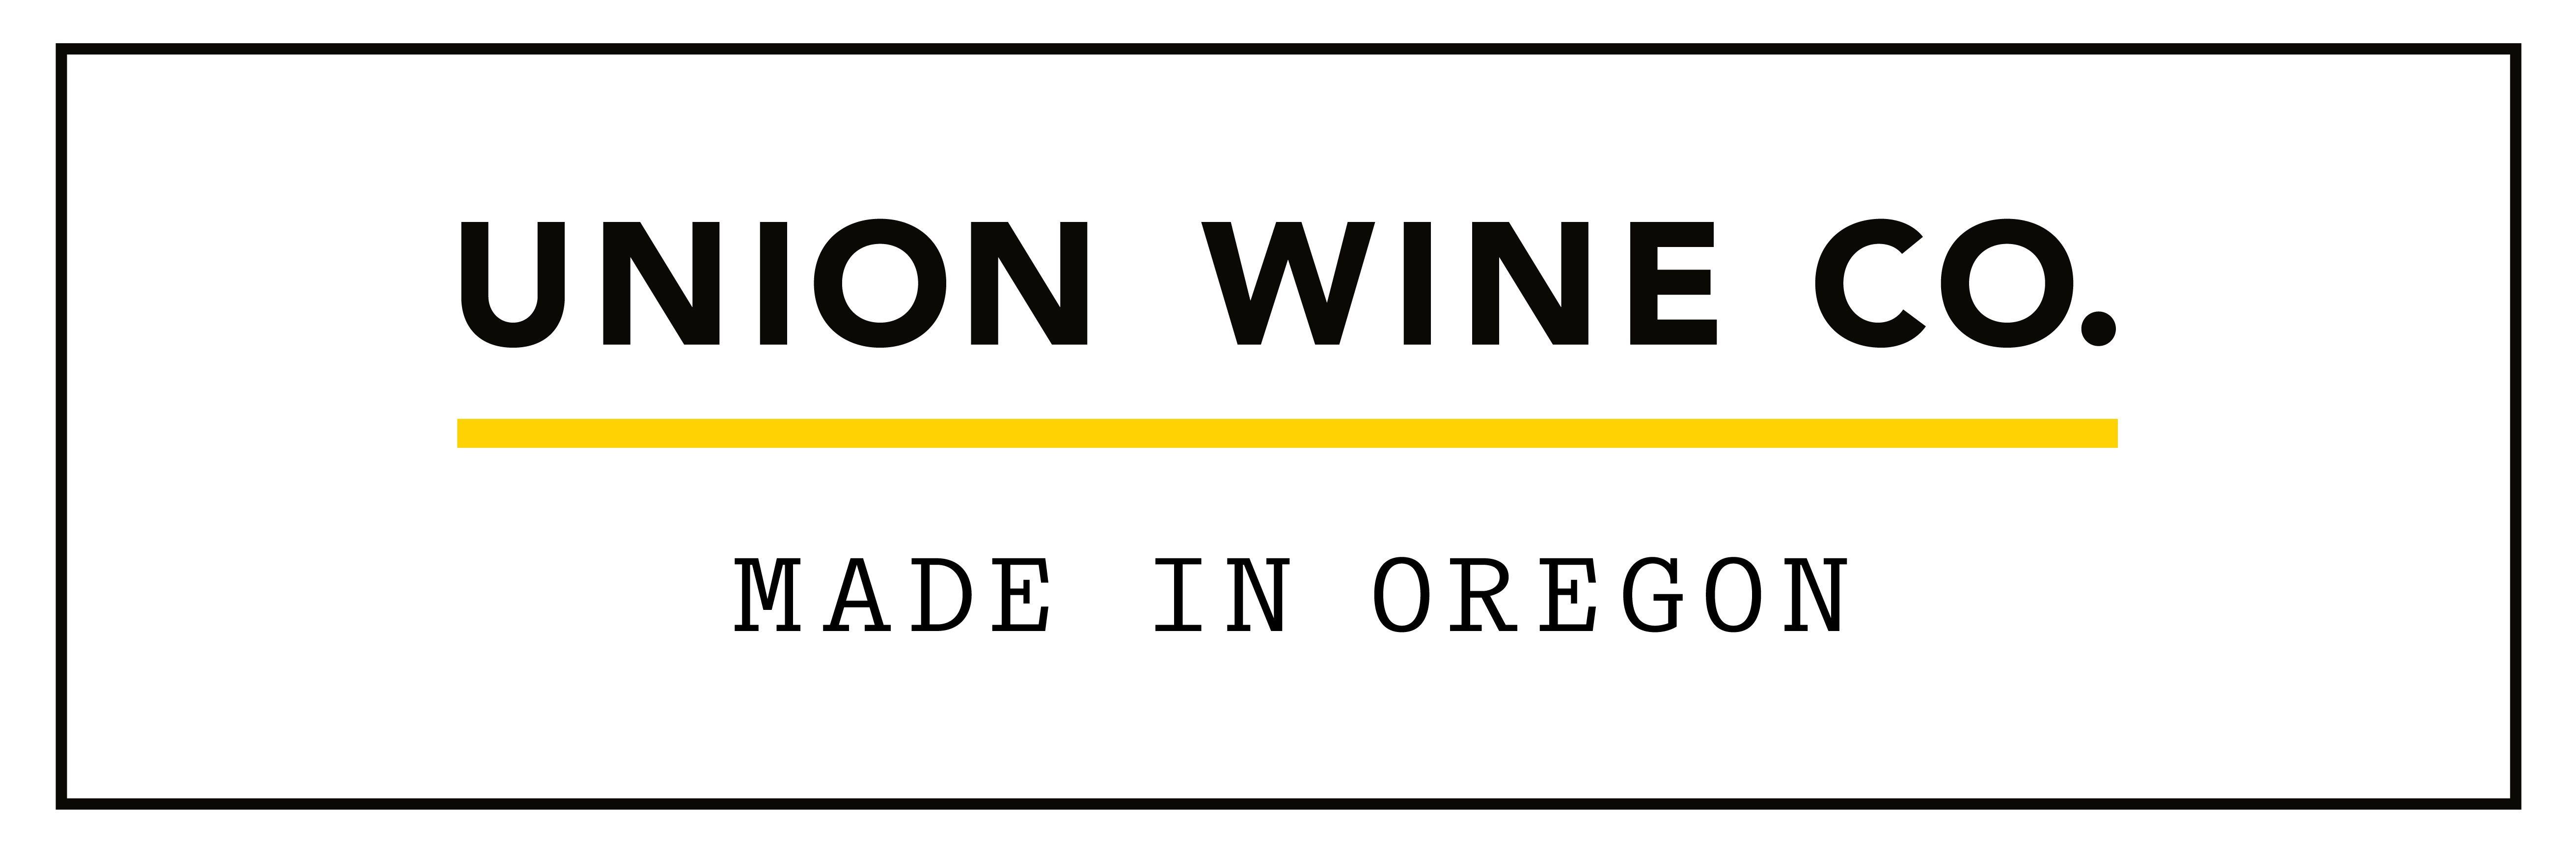 Union Company Logo - Uniquely Oregon: Union Wine Company